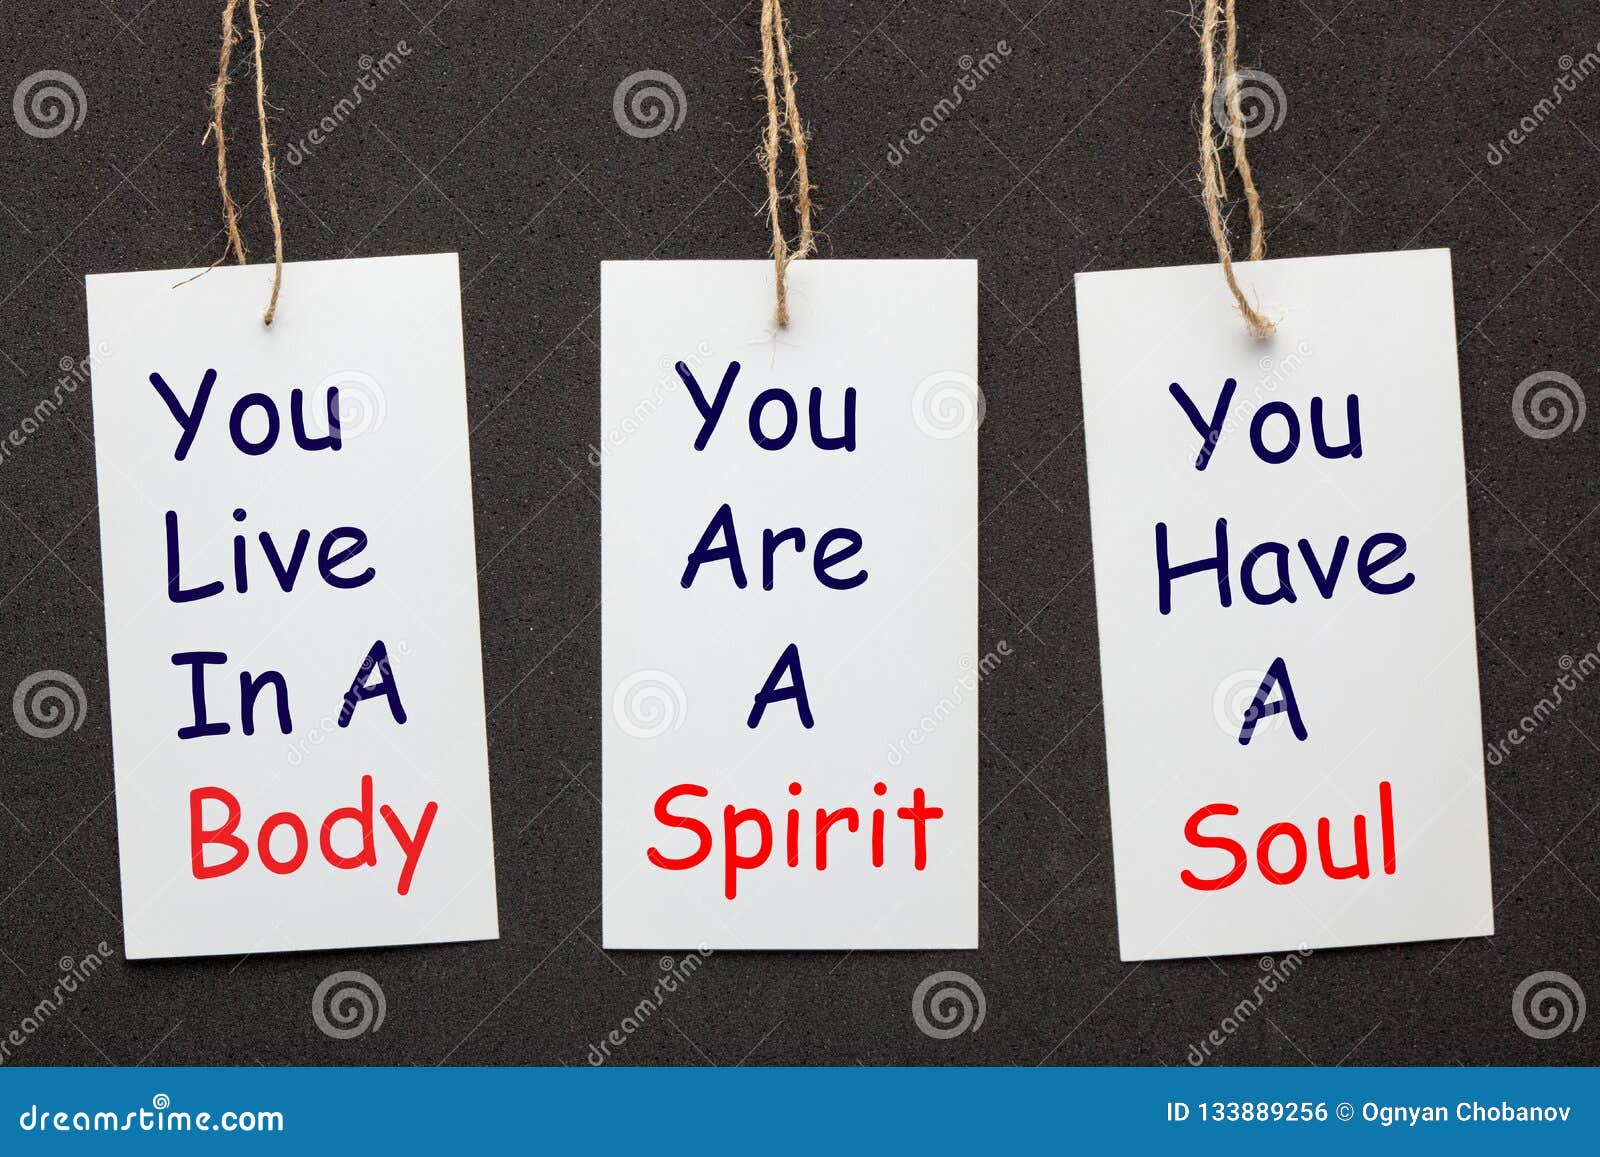 body, soul and spirit